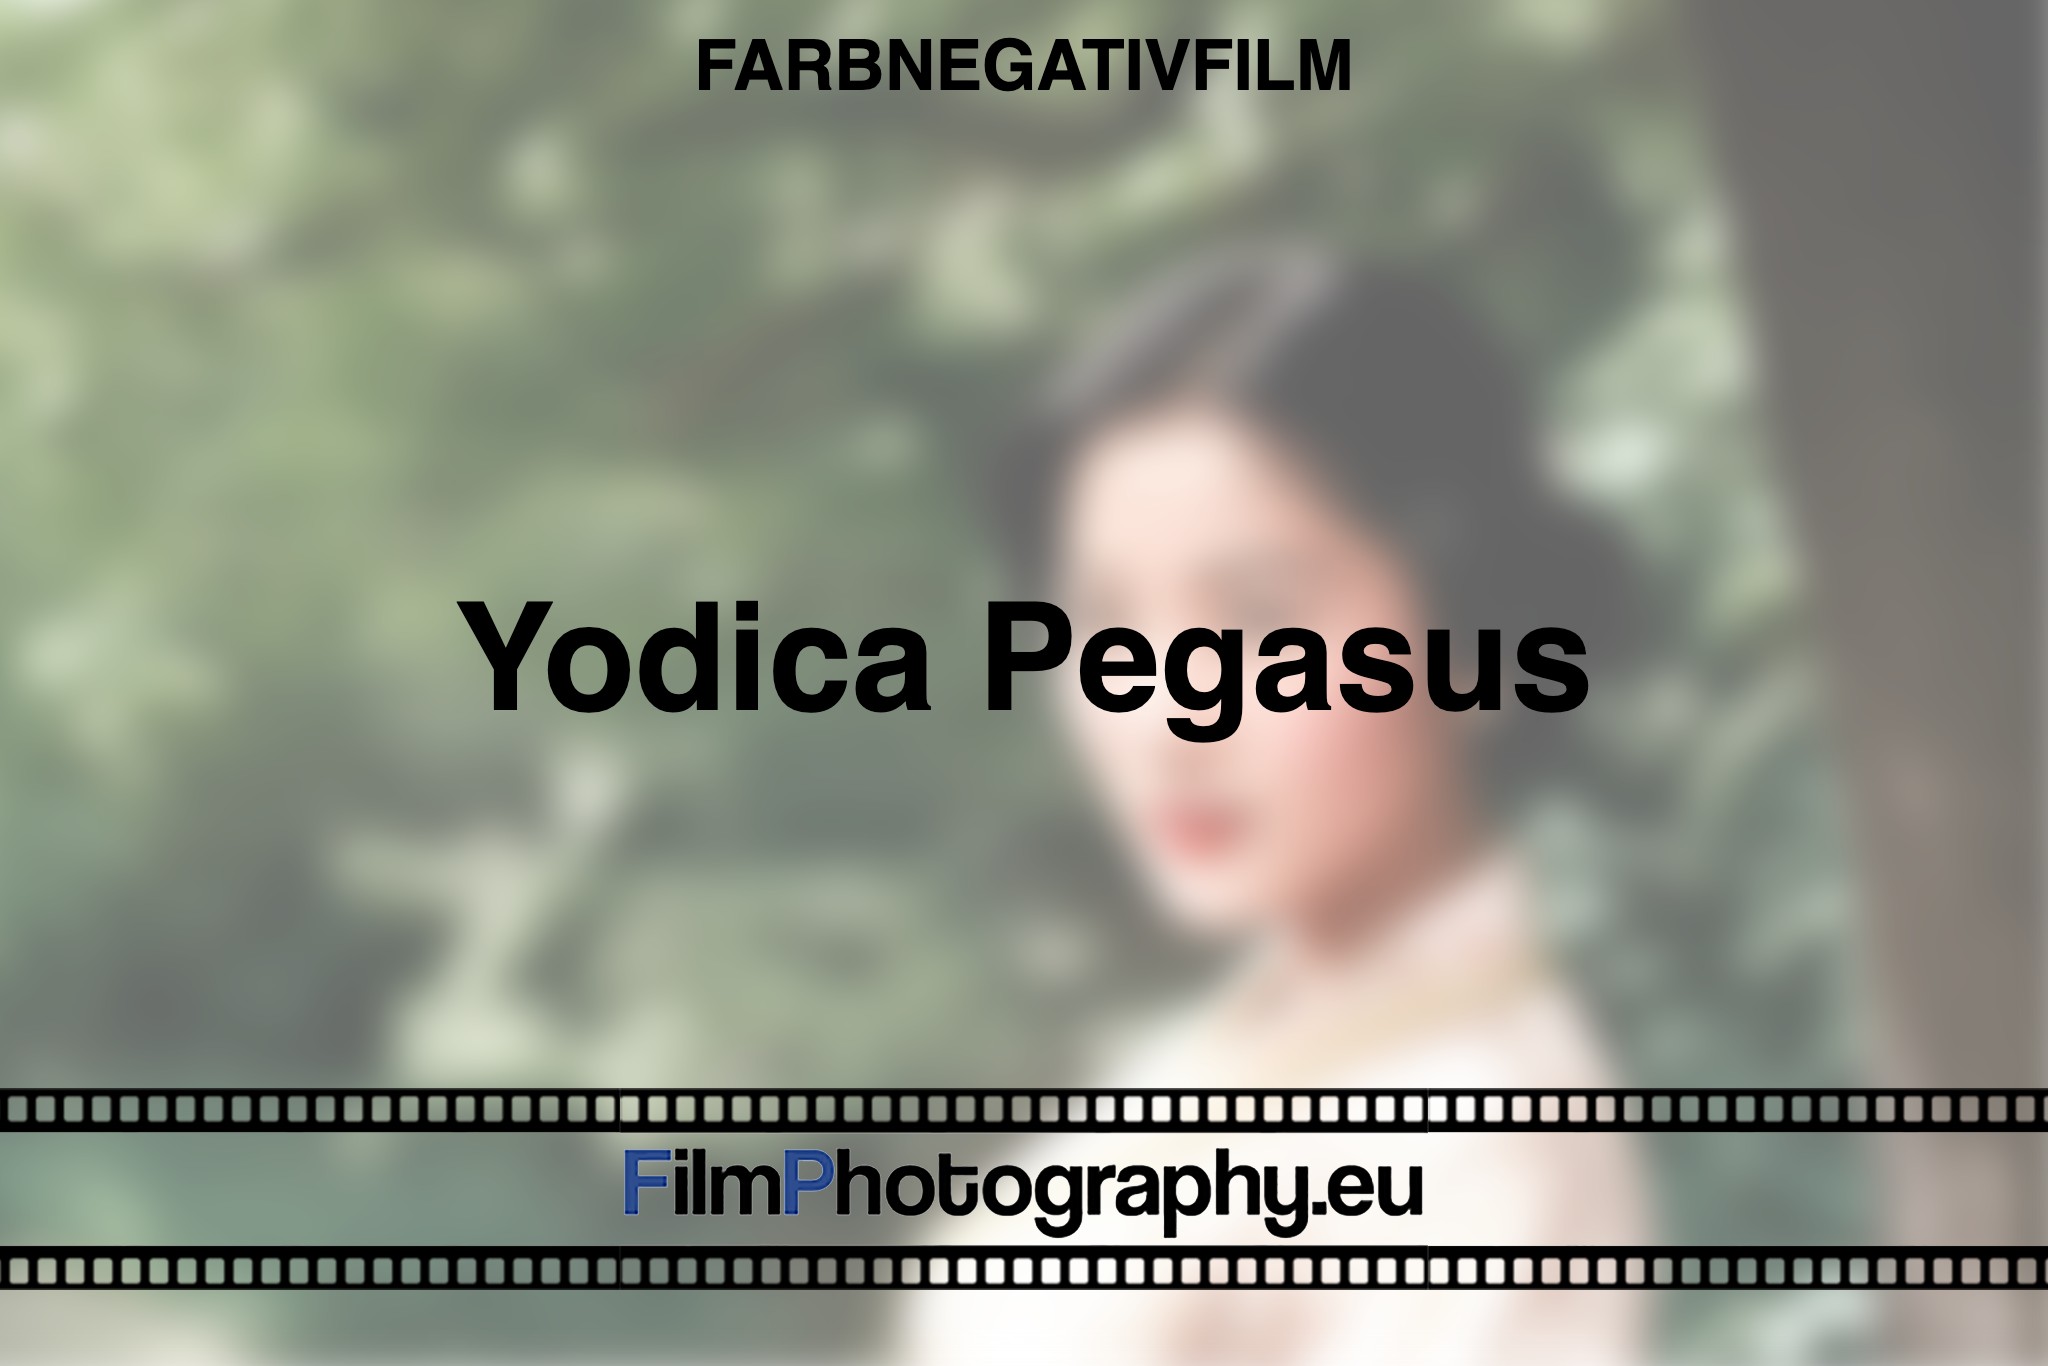 yodica-pegasus-farbnegativfilm-bnv